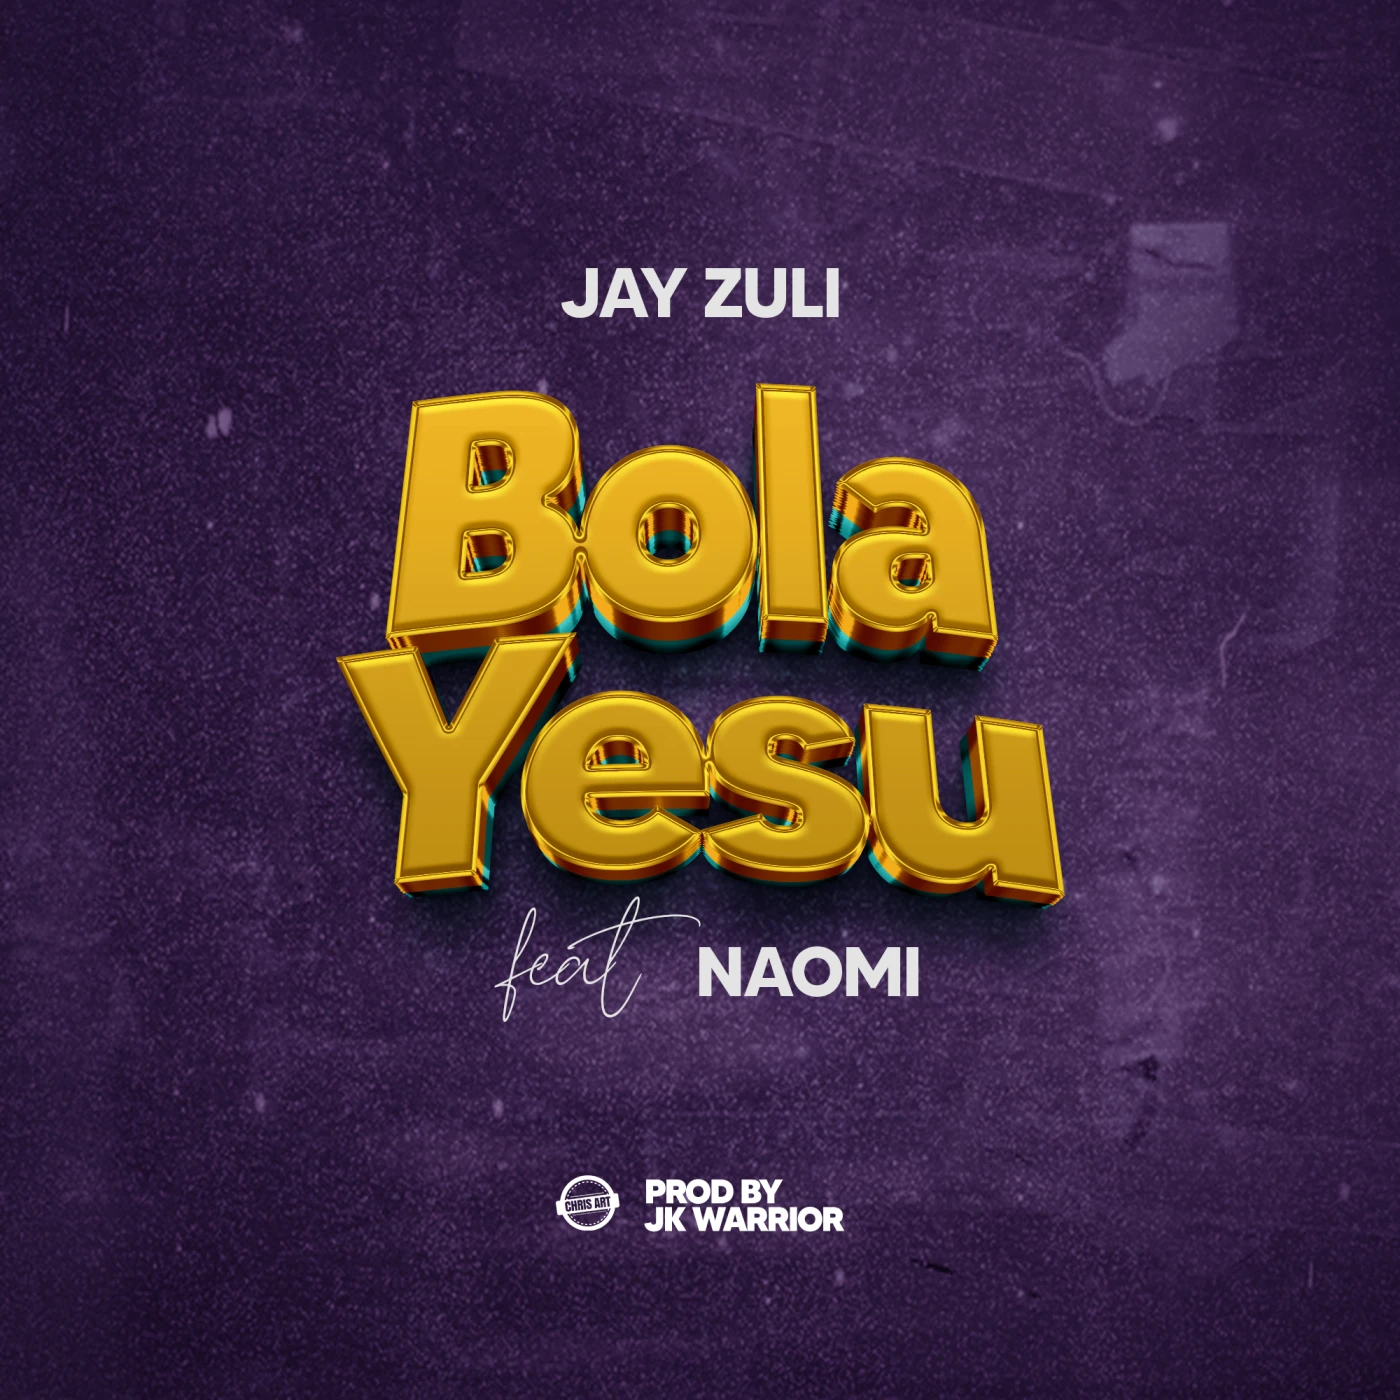 2-bola-yesu-ft-naomi-jay-zuli-Just Malawi Music